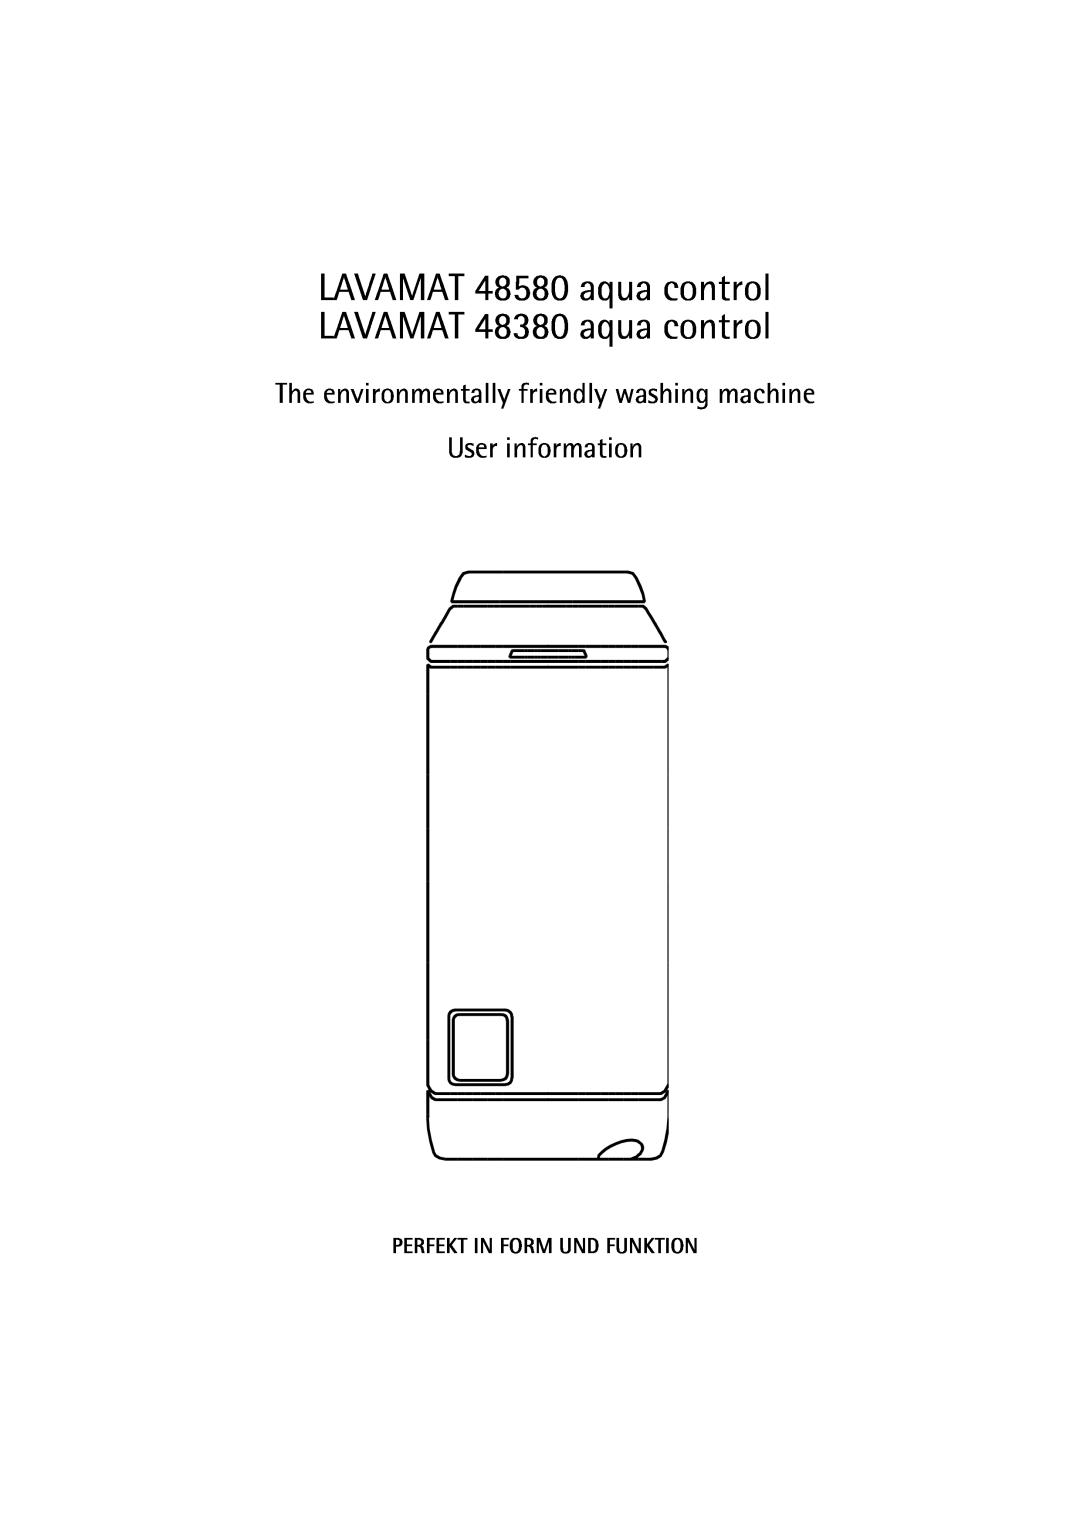 AEG manual Perfekt In Form Und Funktion, LAVAMAT 48580 aqua control LAVAMAT 48380 aqua control 